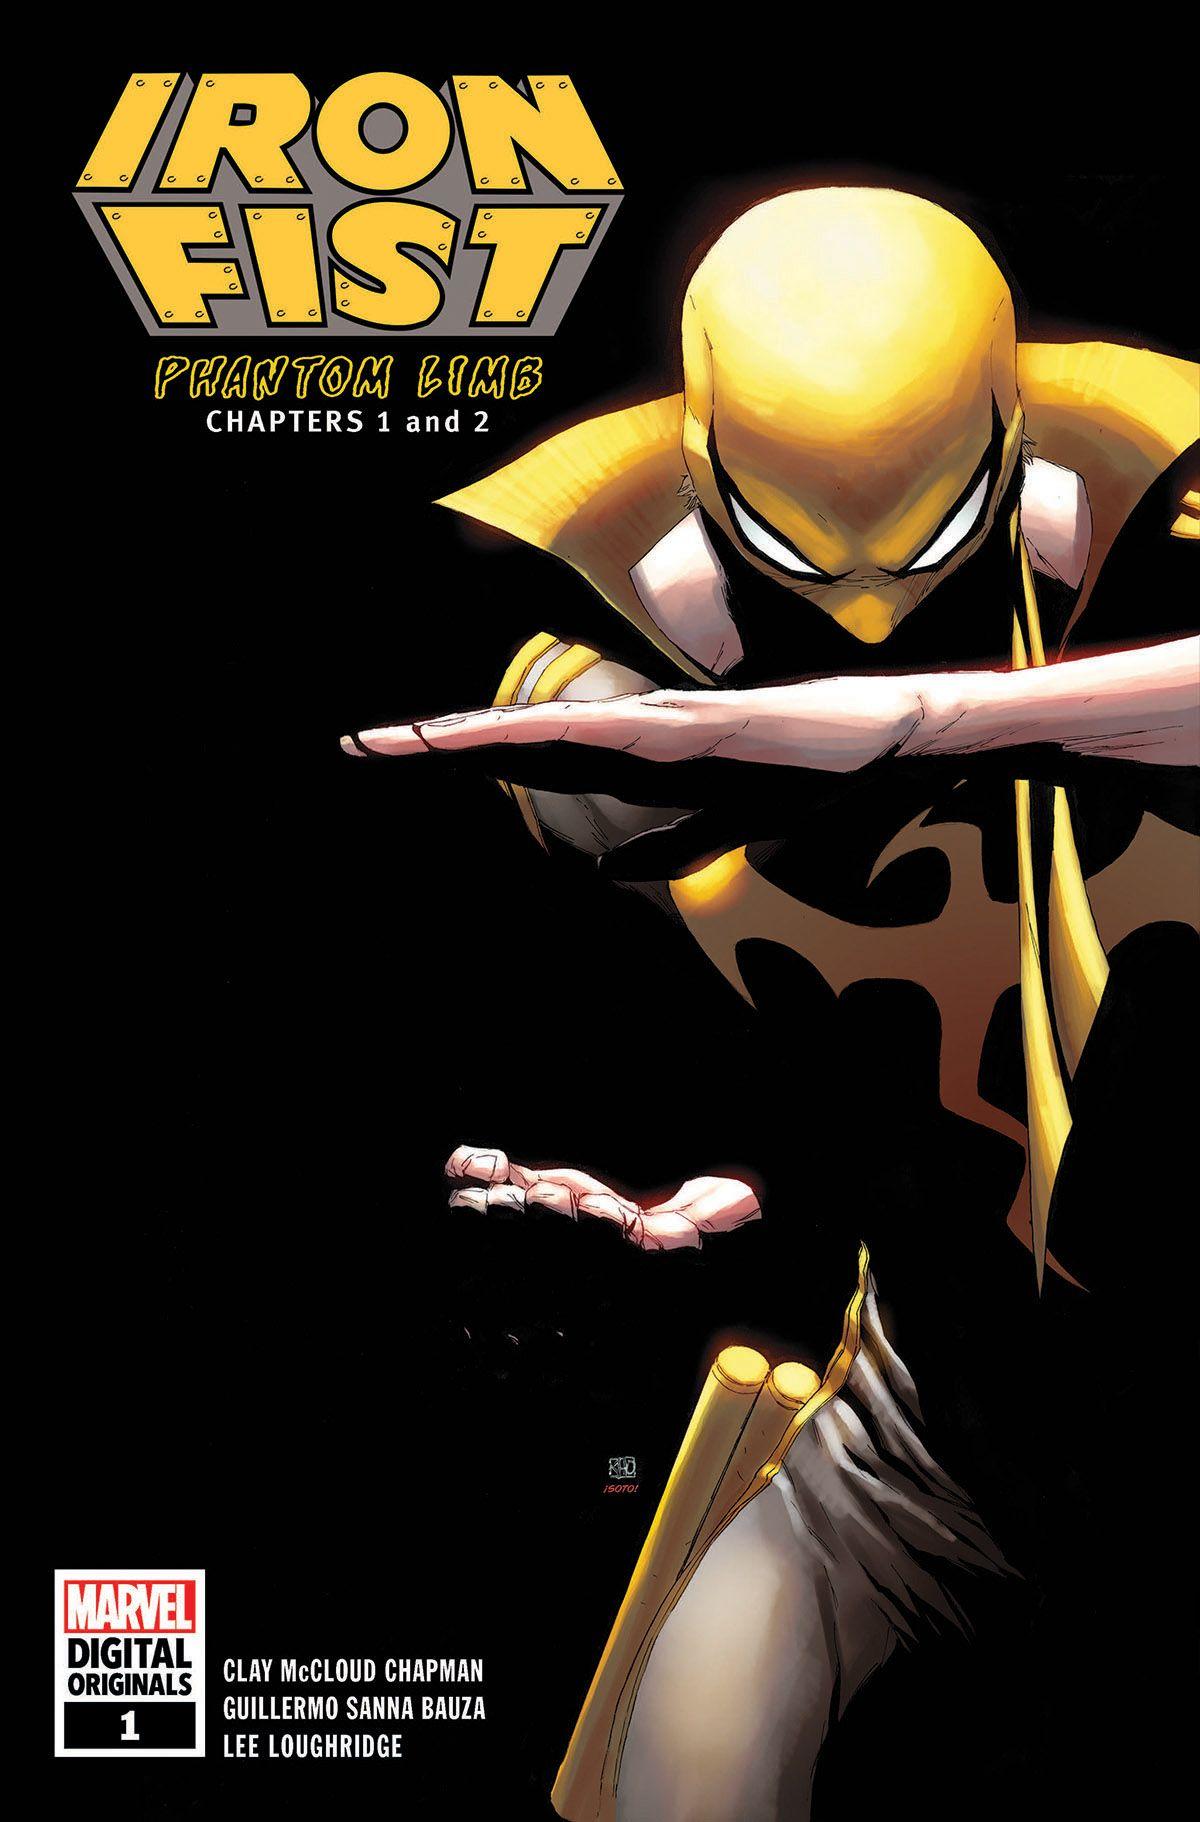 Iron Fist - Marvel Digital Original Vol. 1 #1